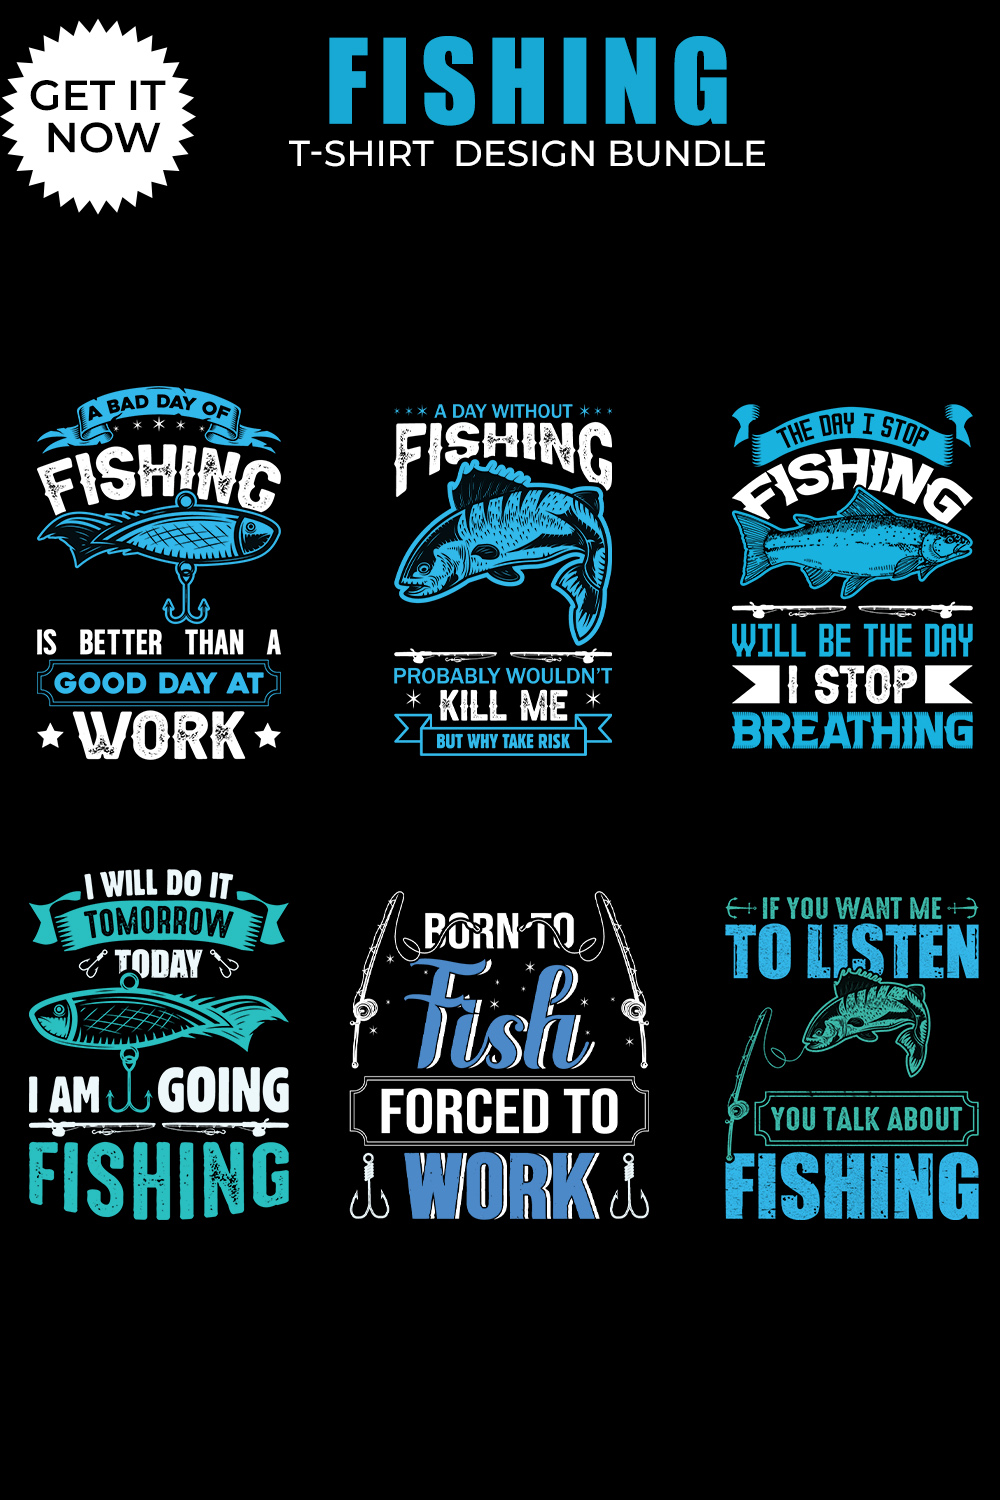 6 fishing t shirt design bundle - Fishing t shirt designs pinterest preview image.